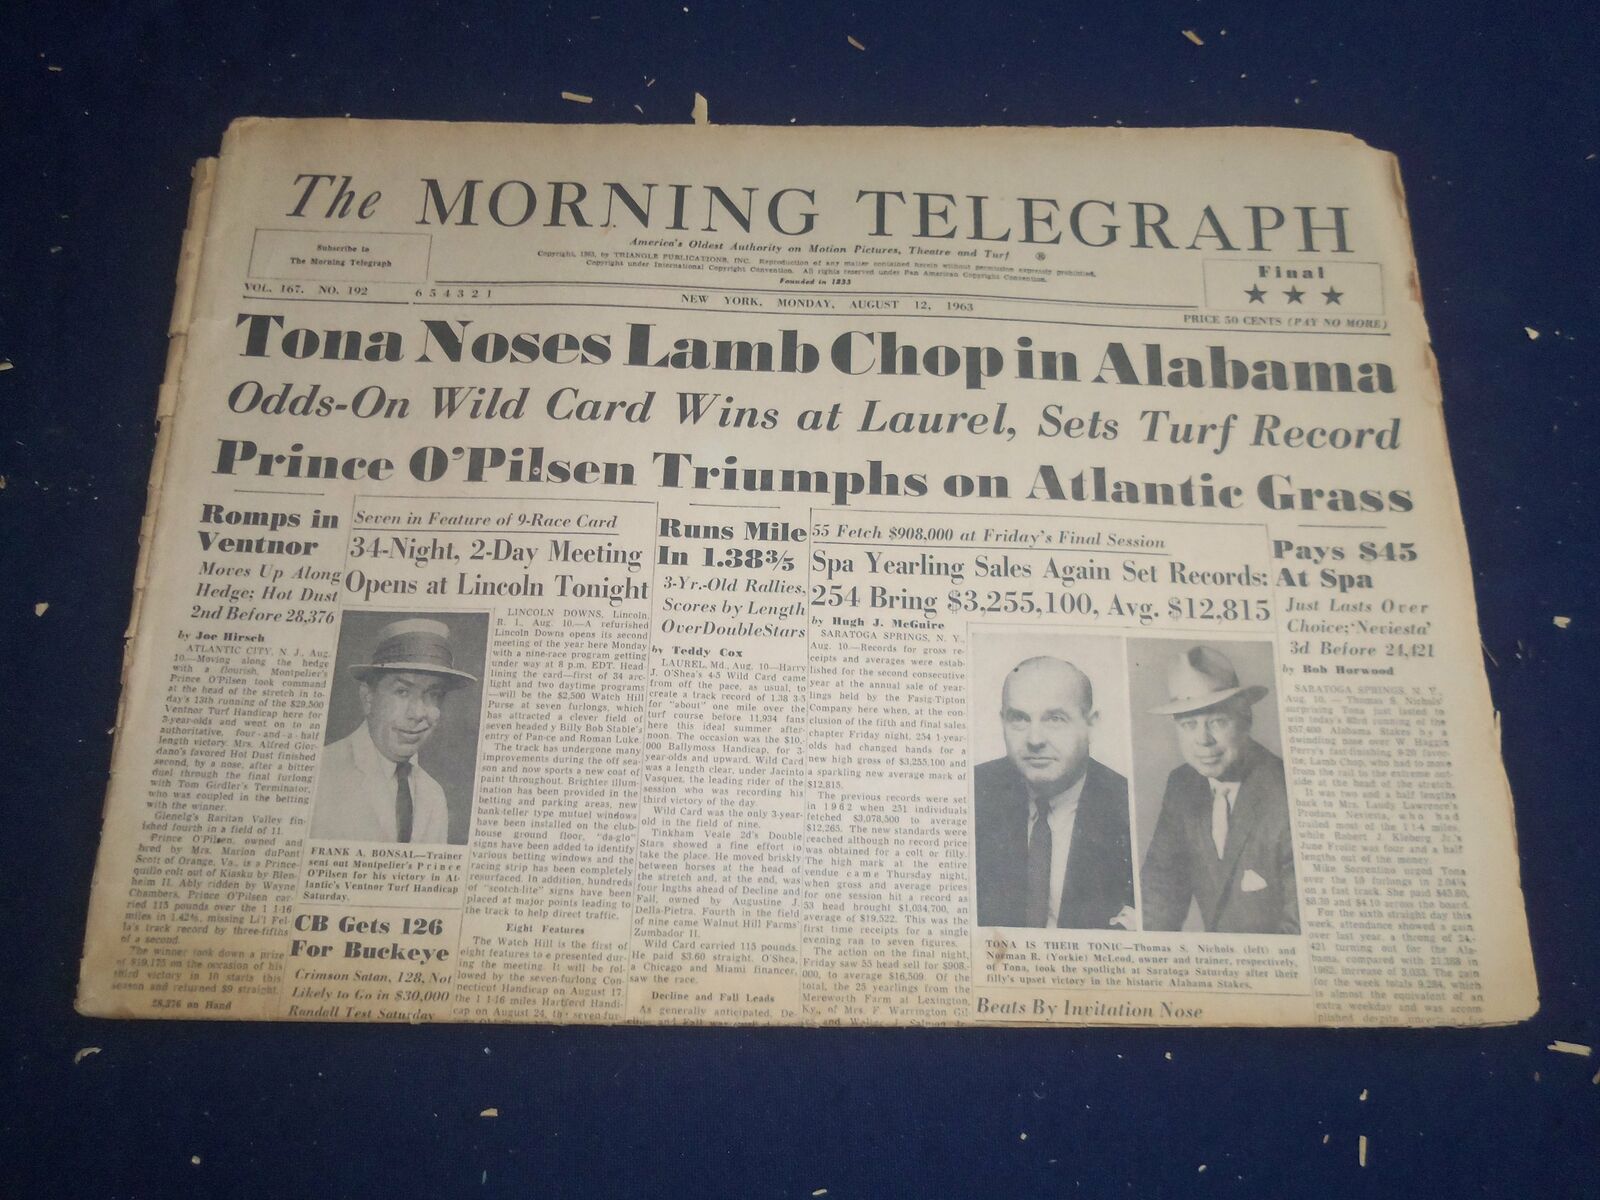 1963 AUGUST 12 THE MORNING TELEGRAPH - TONA NOSES LAMB CHOP IN ALABAMA - NP 5550